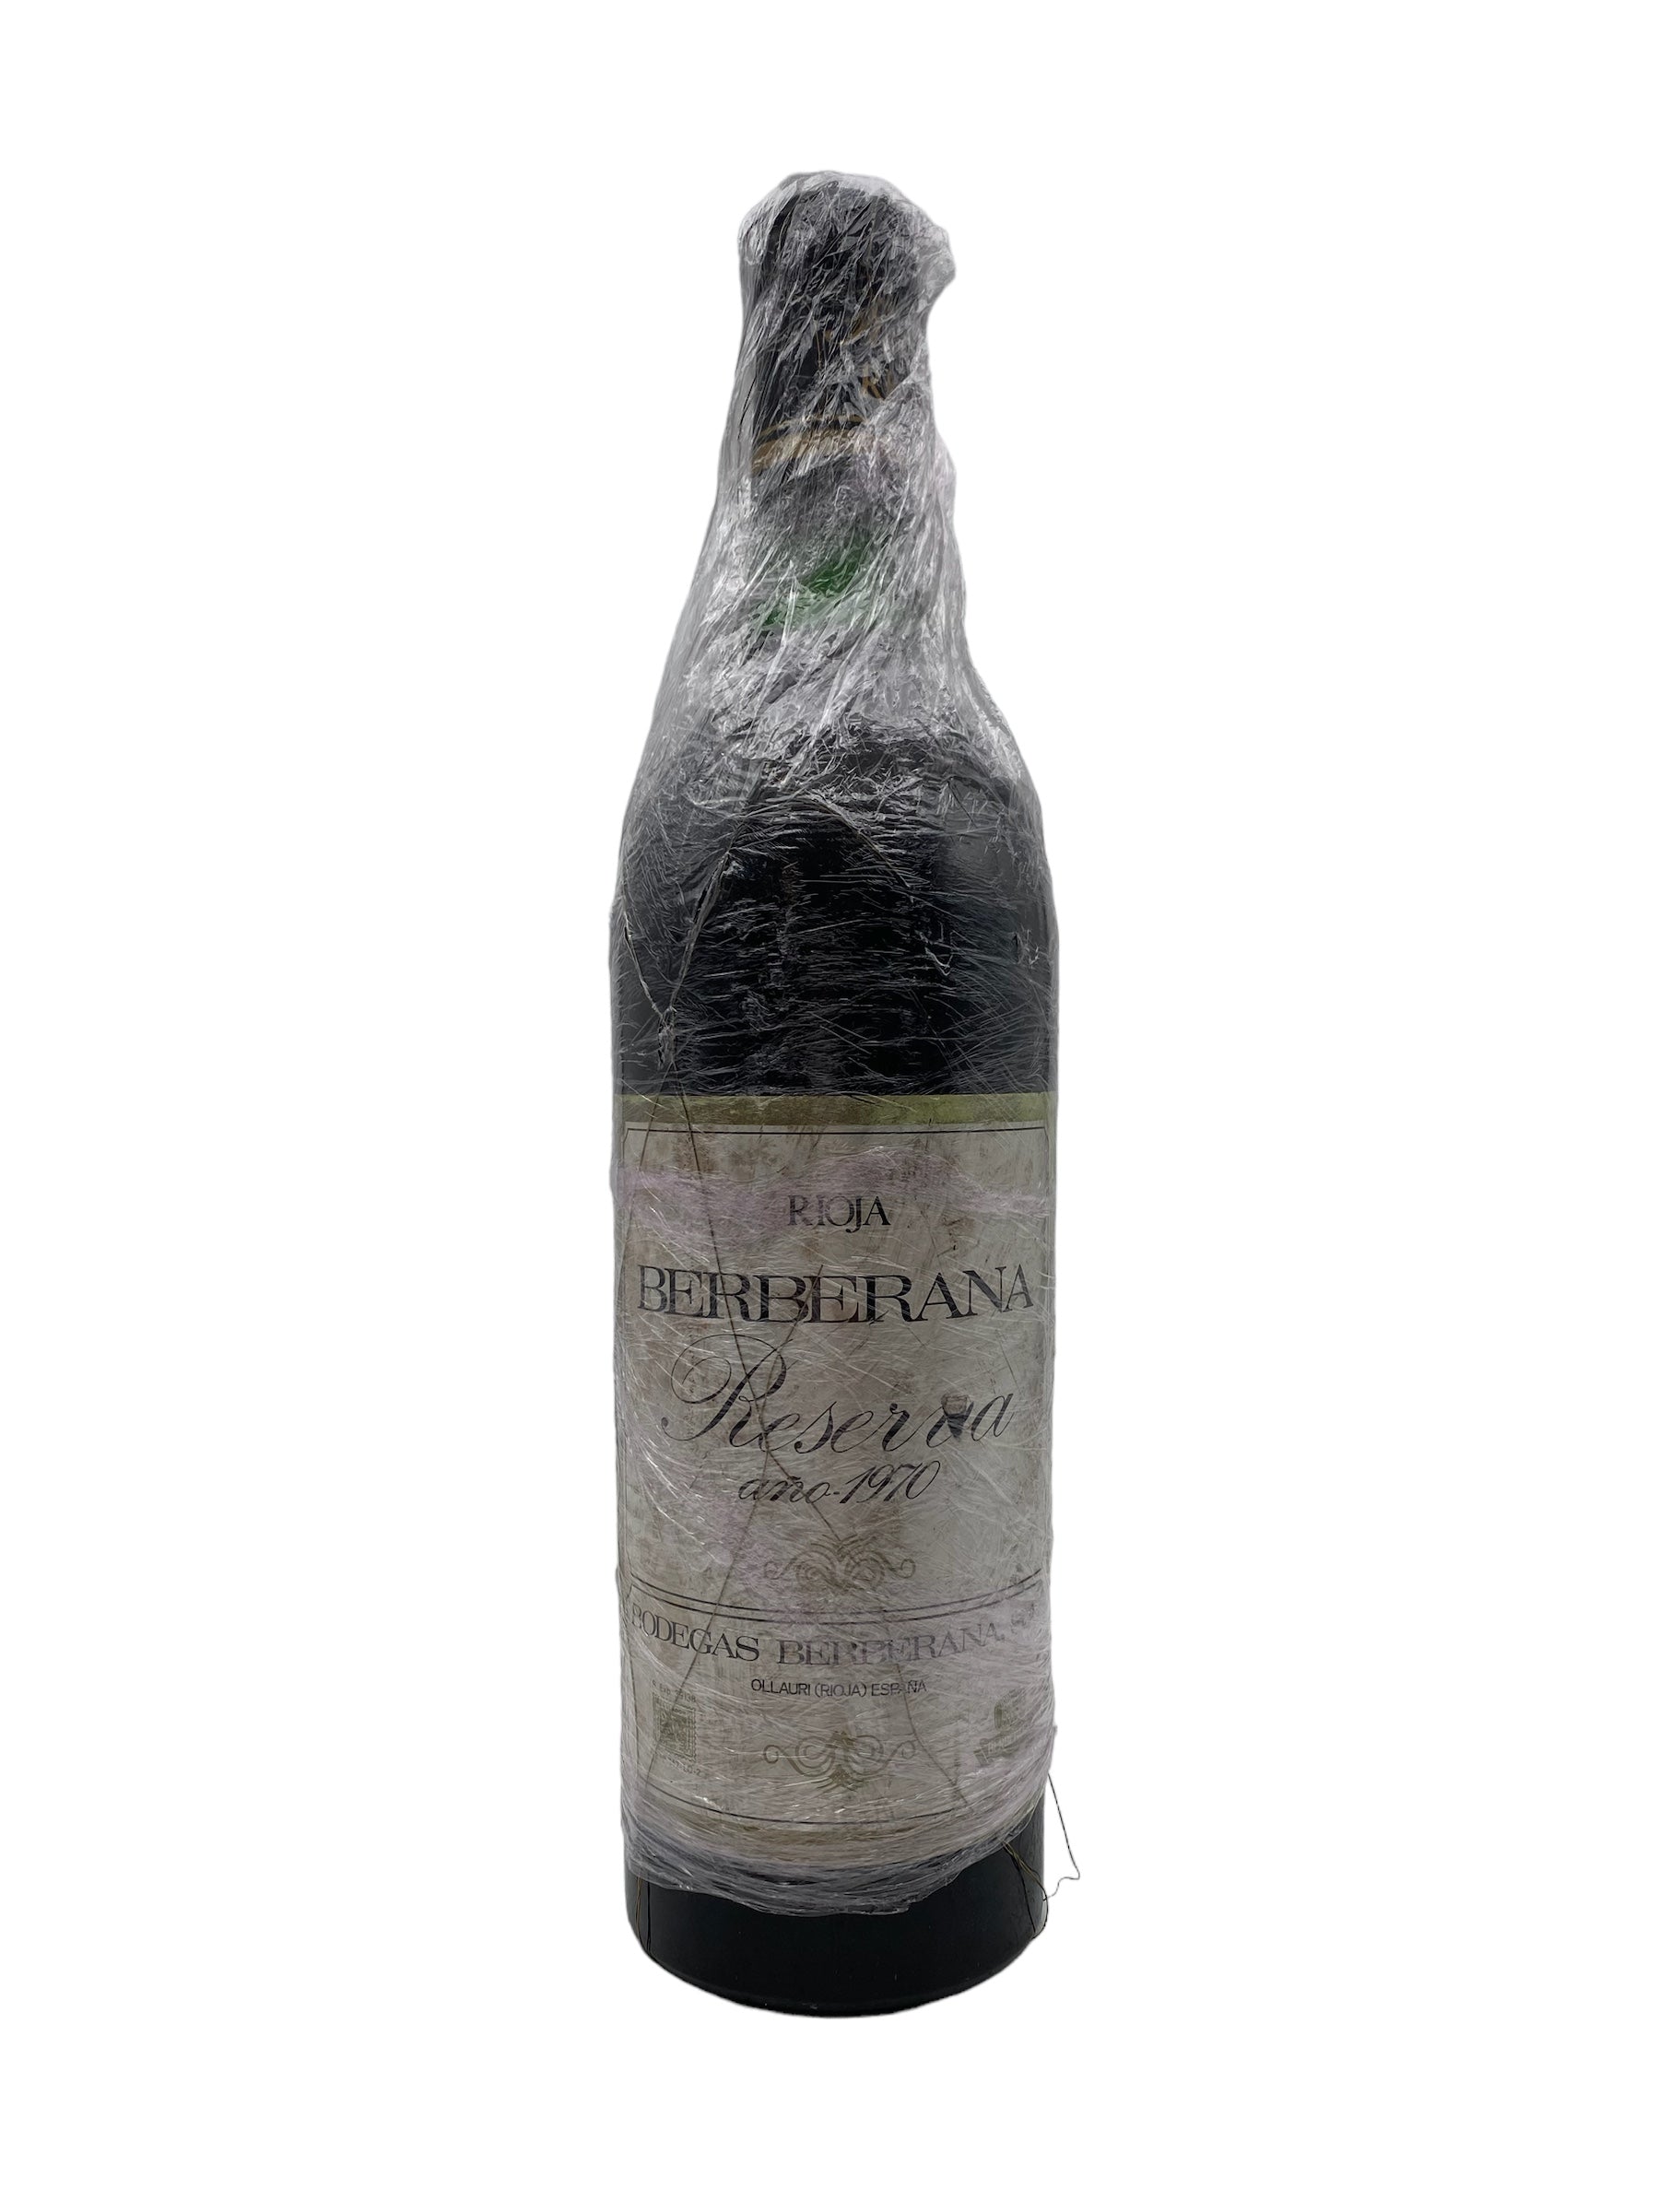 Se Rioja Berberana 1970 Reserva hos Bottleswithhistory.dk